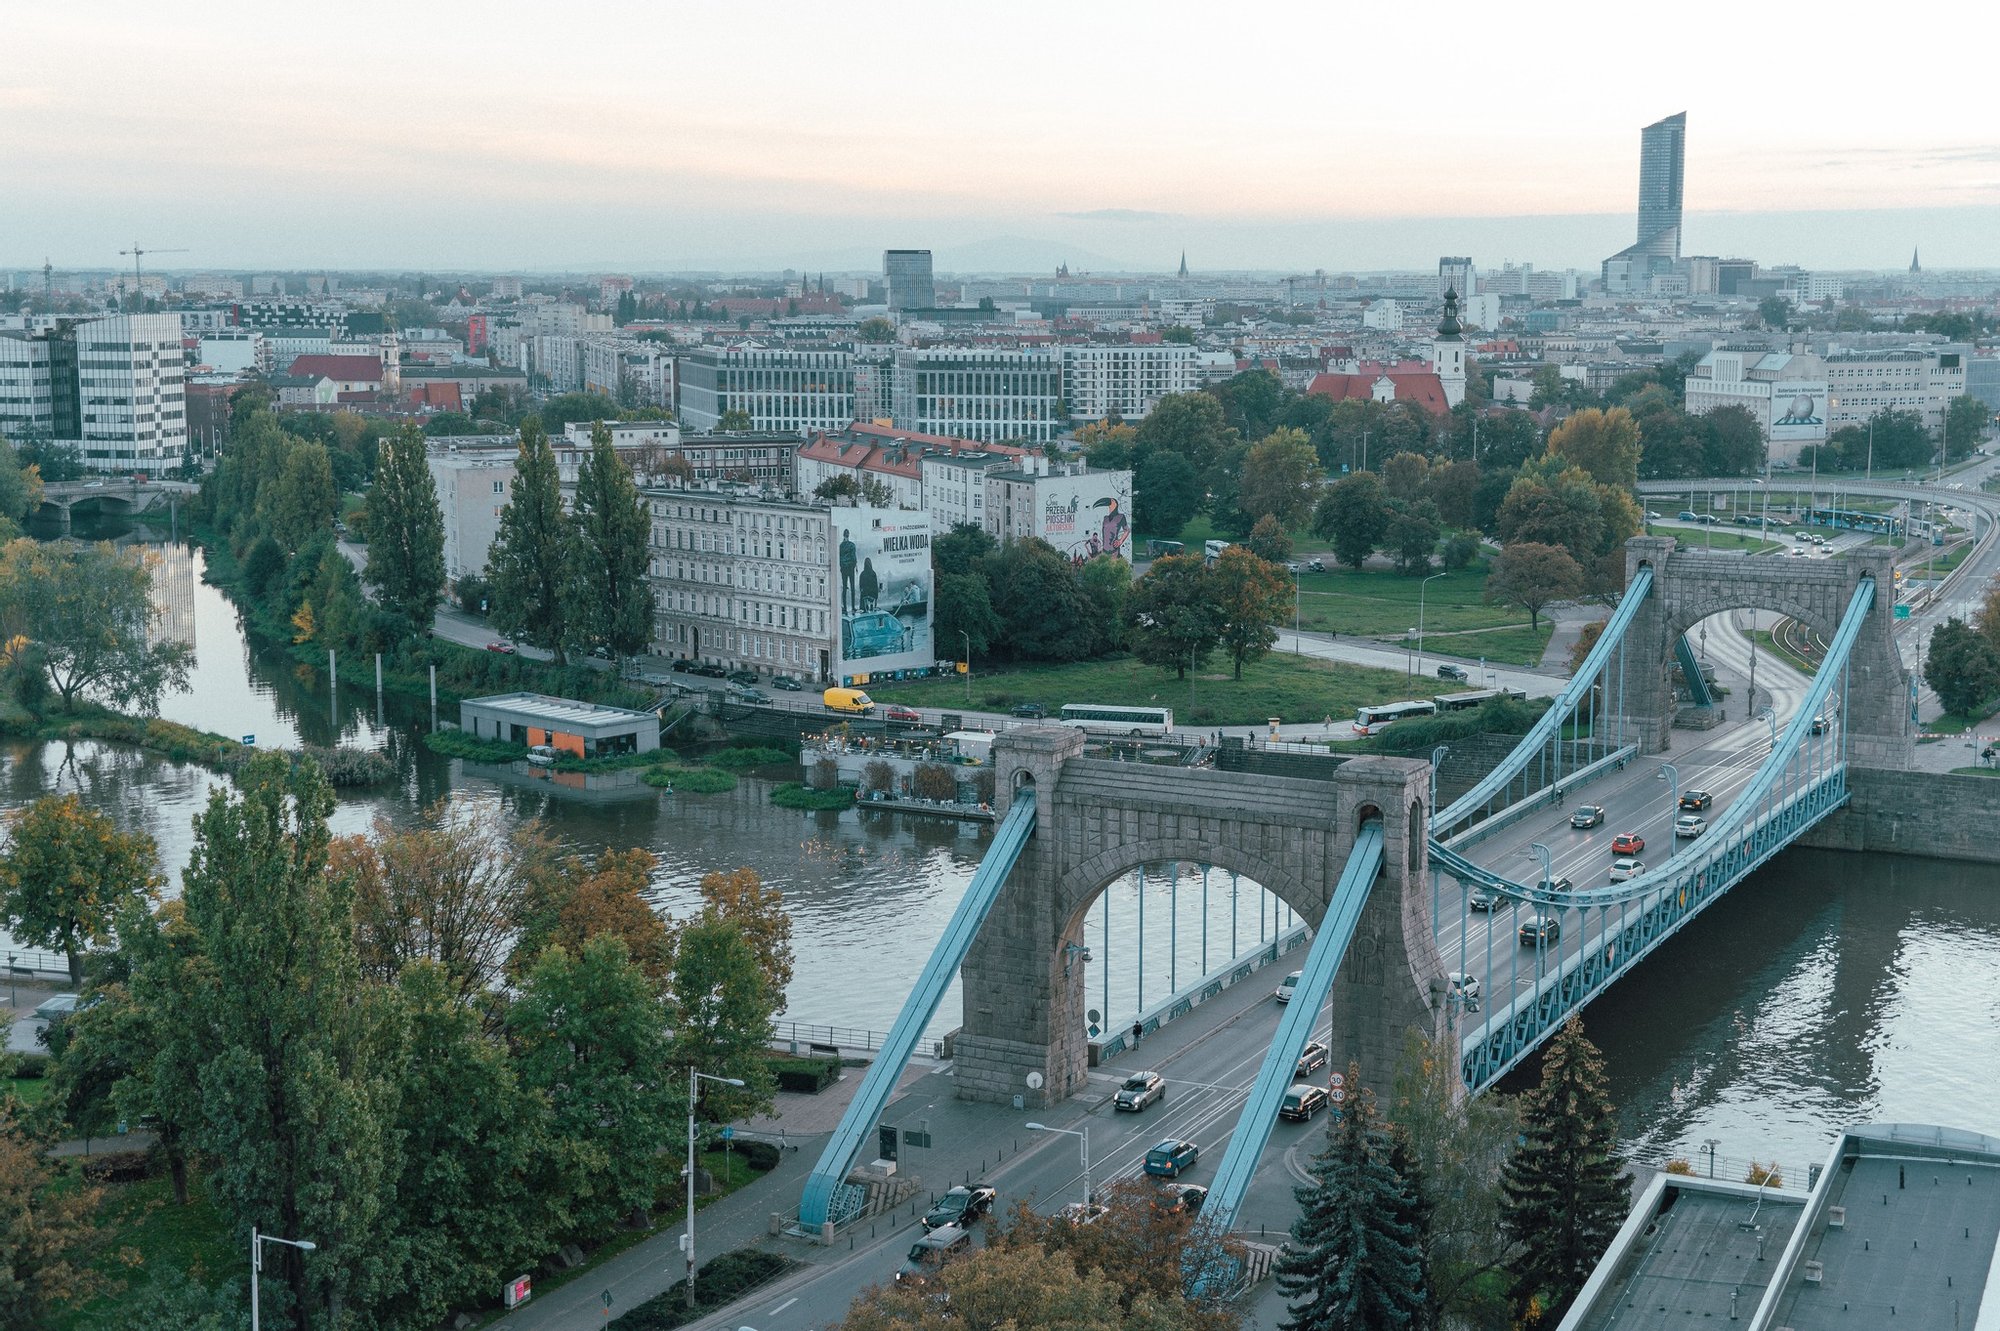 Widok z lotu ptaka na most Grunwaldzki i okolice.